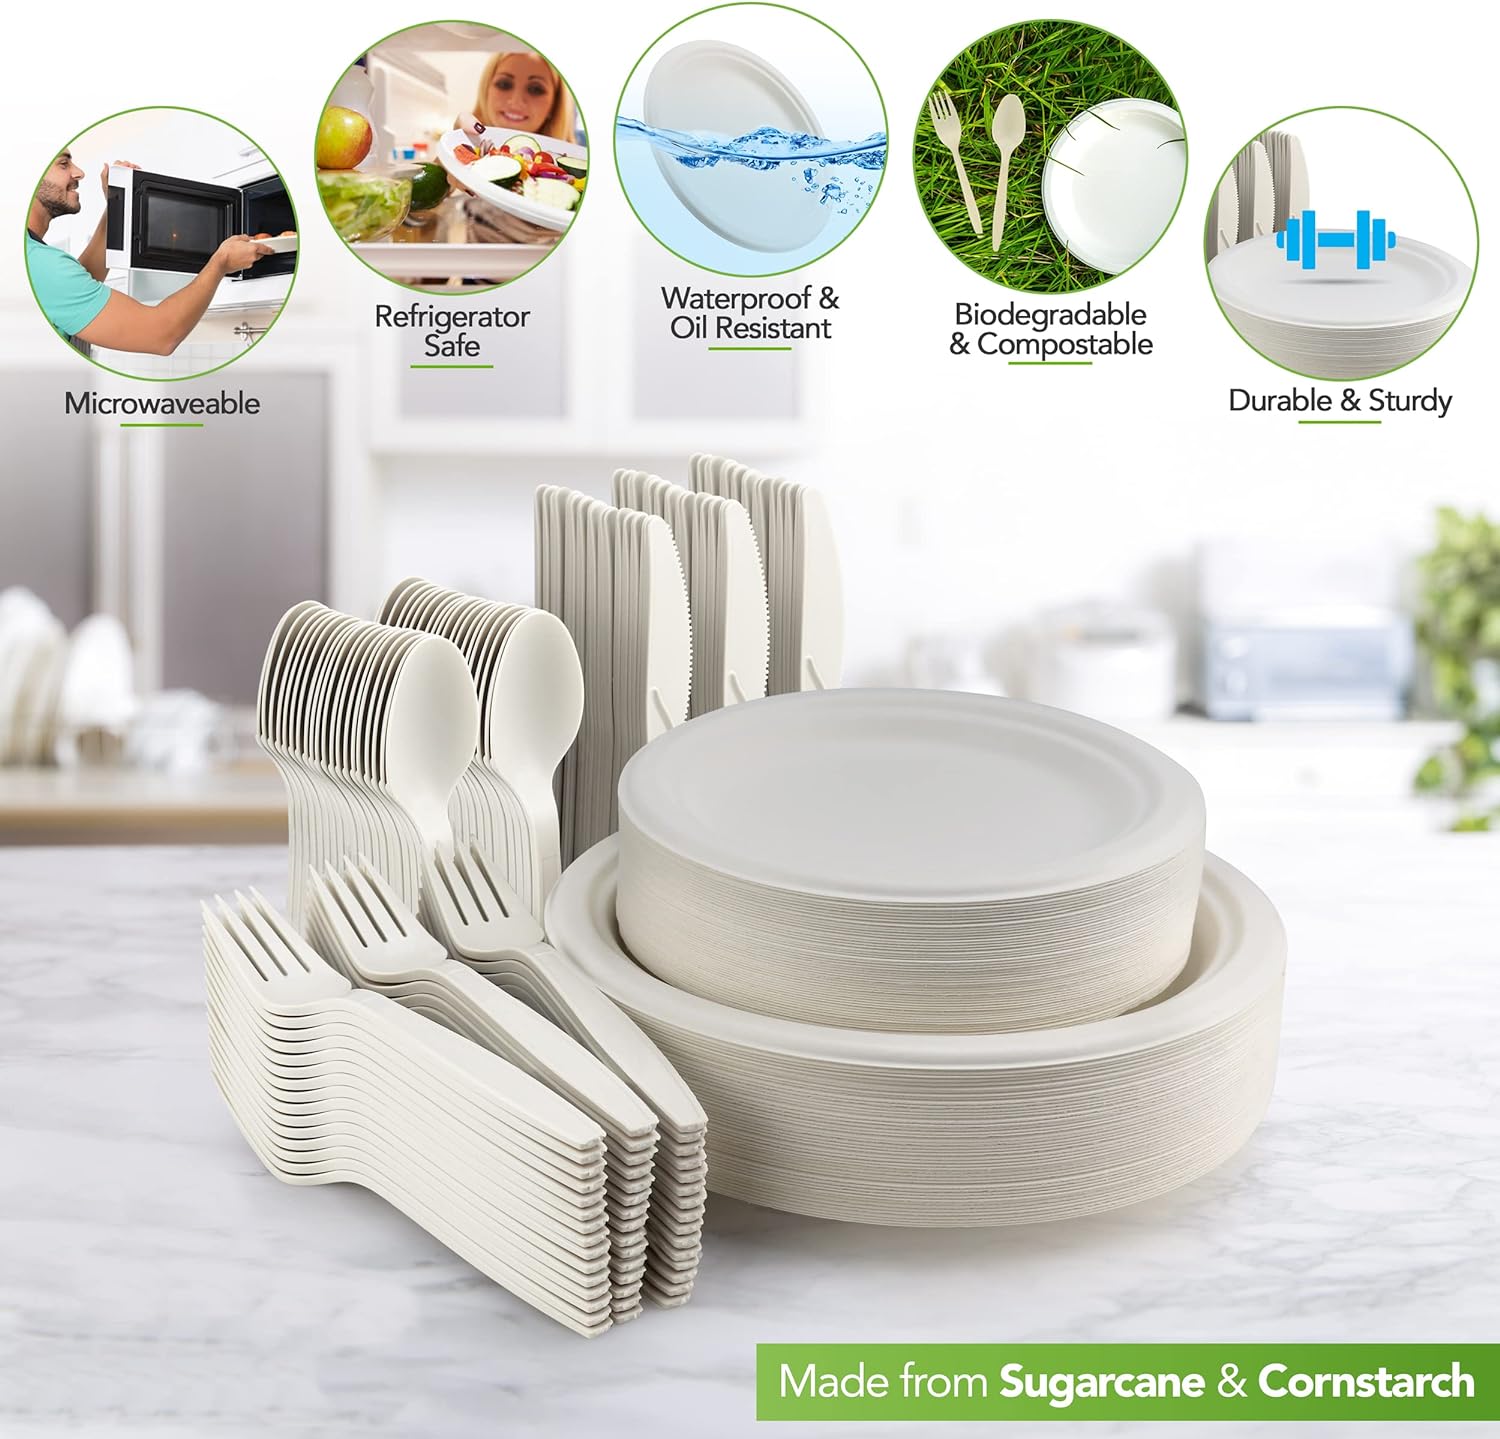 BIRCHIO 300 Piece (50 Sets) Biodegradable Paper Plates Set (EXTRA LONG  UTENSILS), Disposable Dinnerware Set, Eco Friendly Compostable Plates &  Utensil